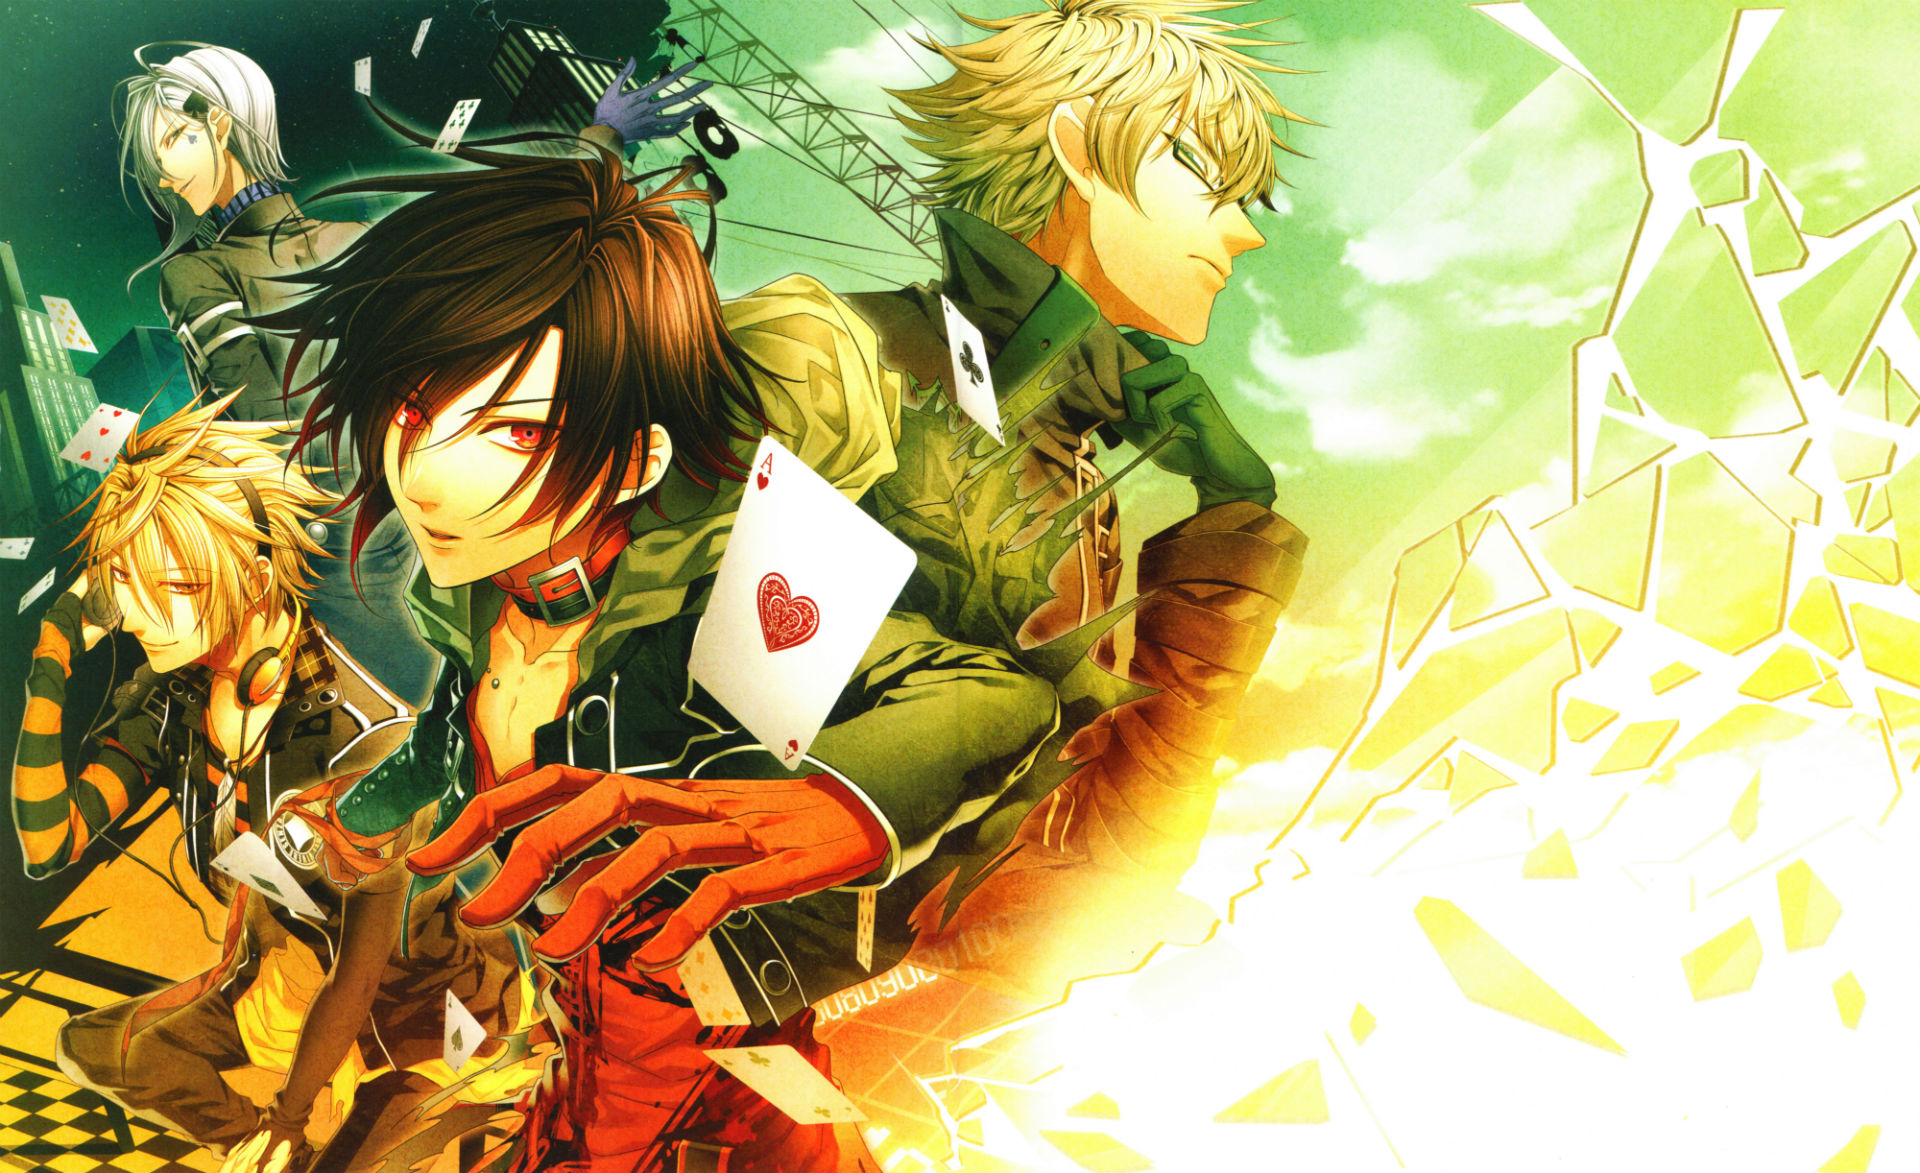 Anime Amnesia HD Wallpaper | Background Image